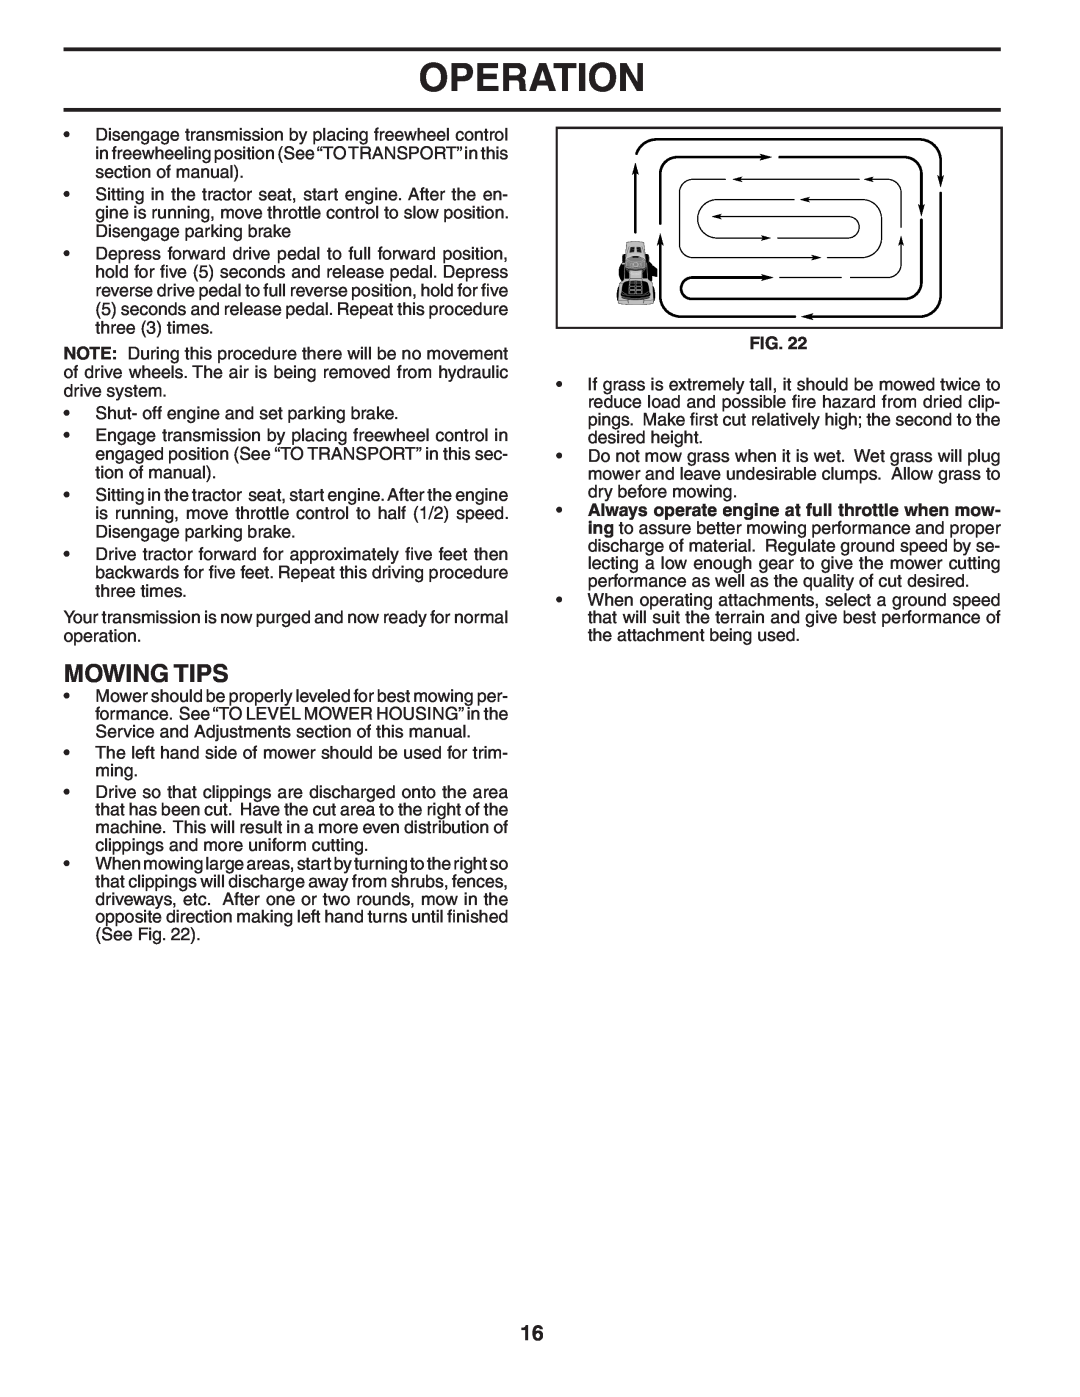 Poulan 402464 manual Mowing Tips, Operation 